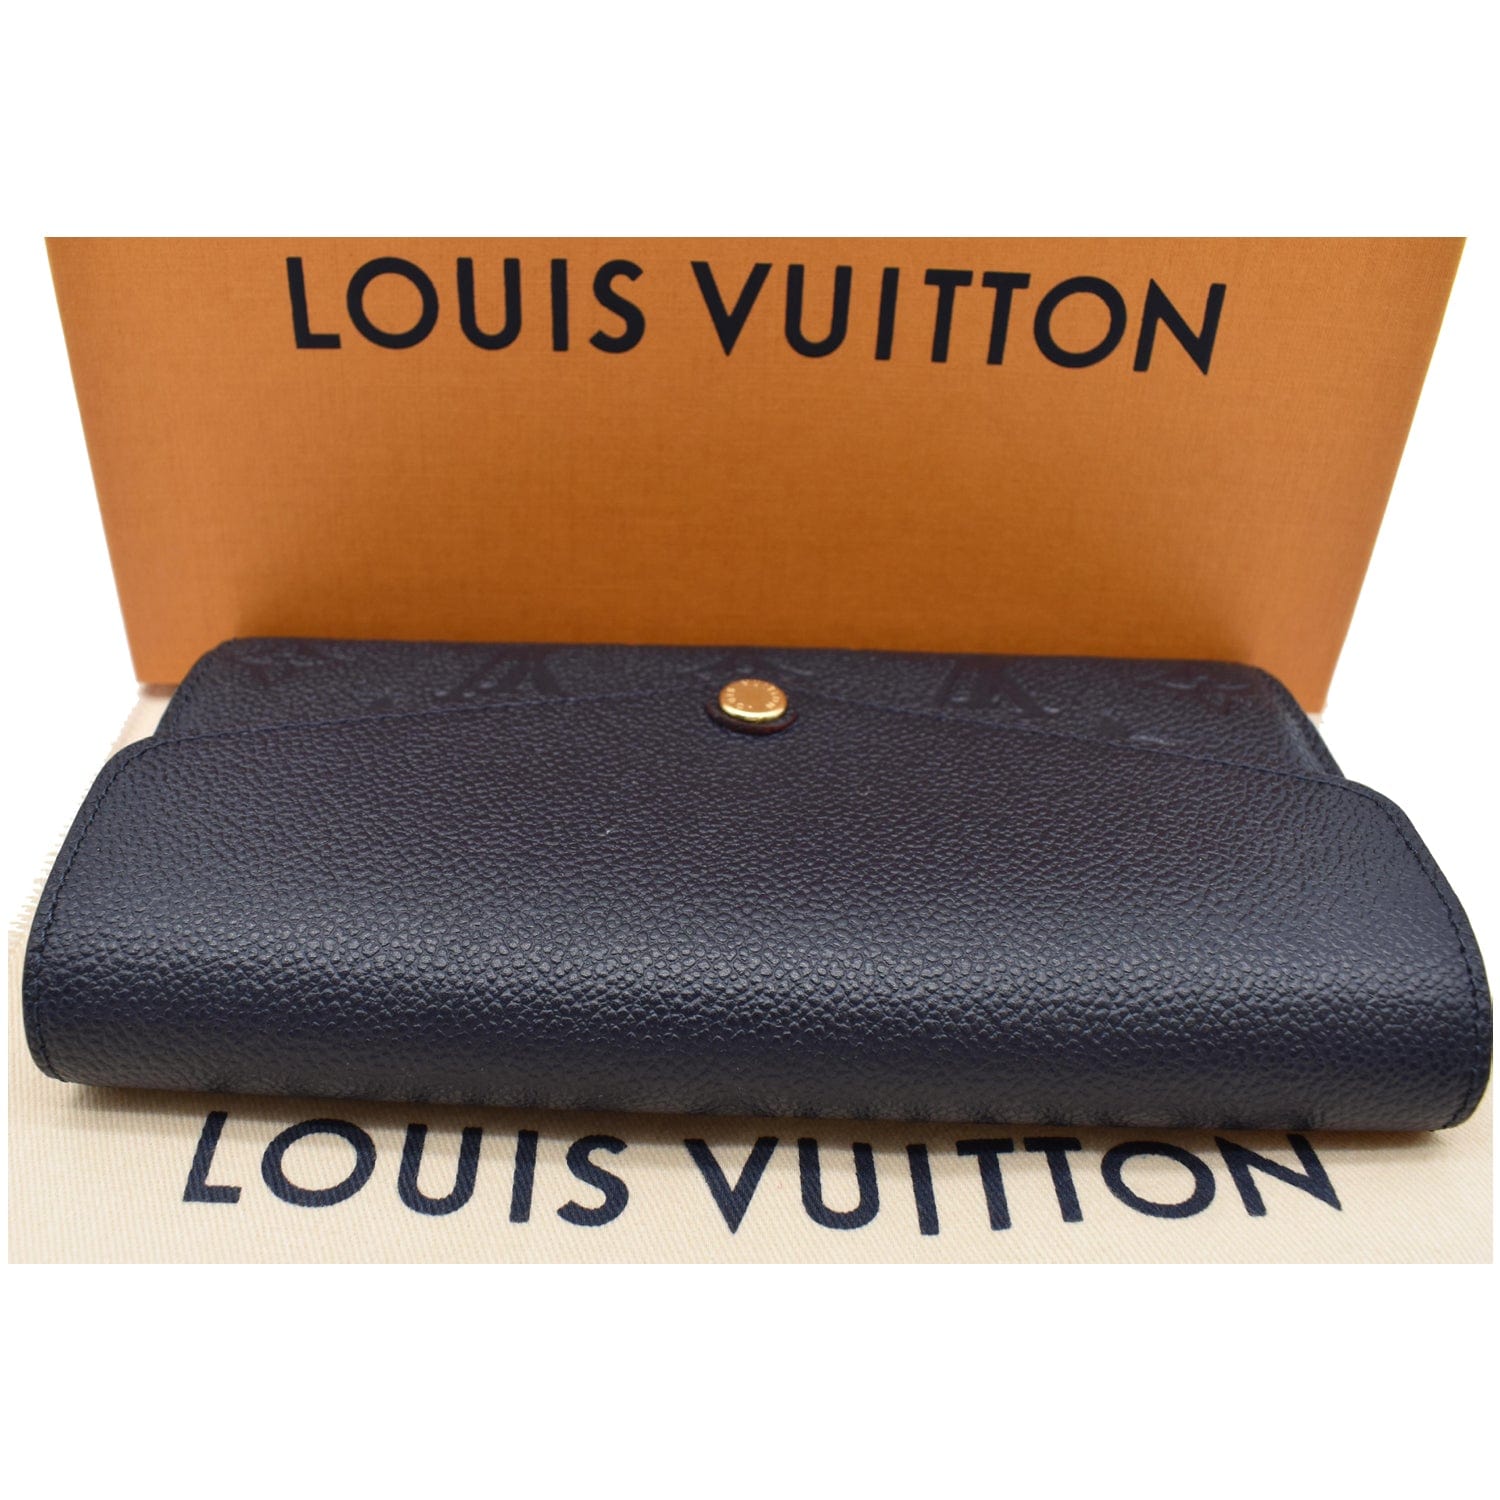 Business Card Holder Monogram Empreinte Leather - Wallets and